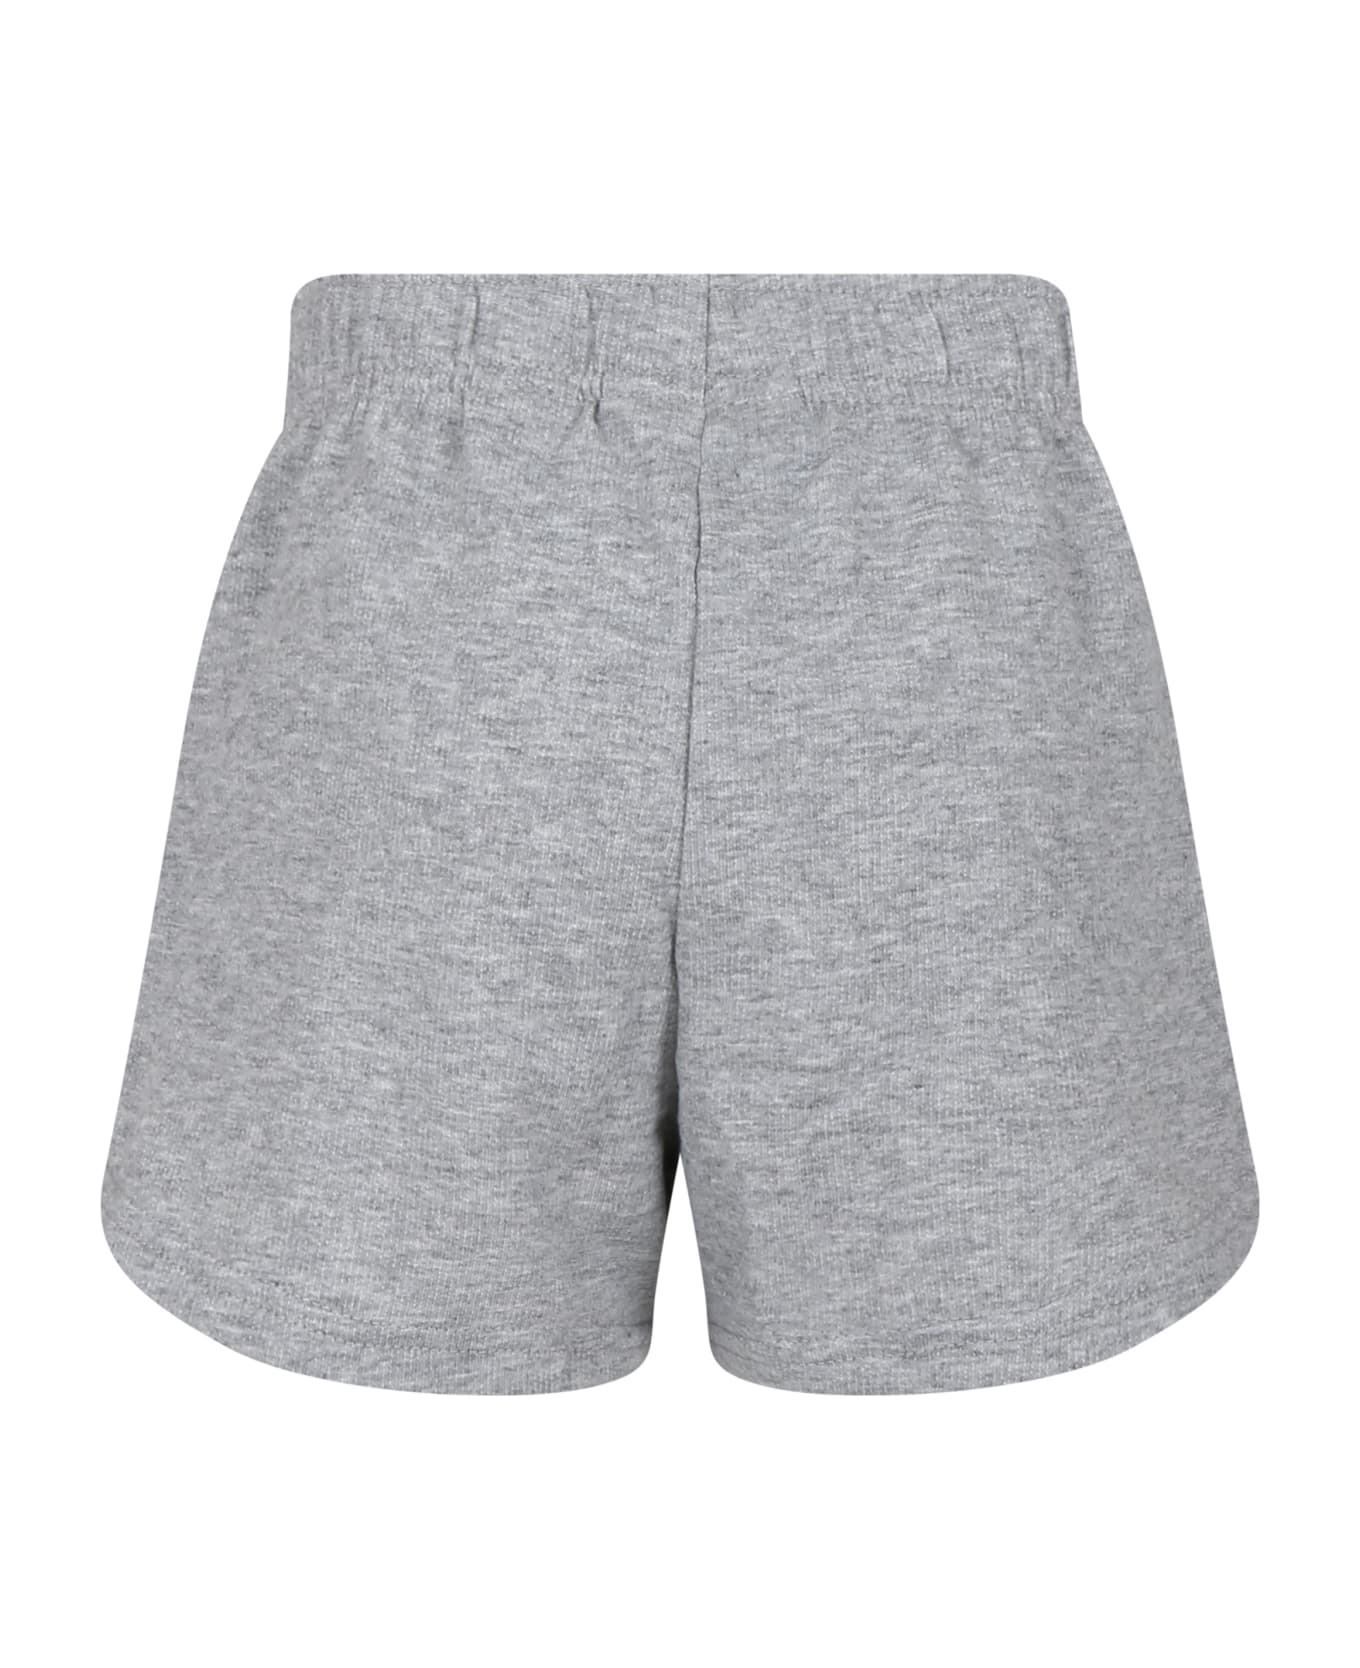 Converse Grey Shorts For Girl With Logo Print - Grey